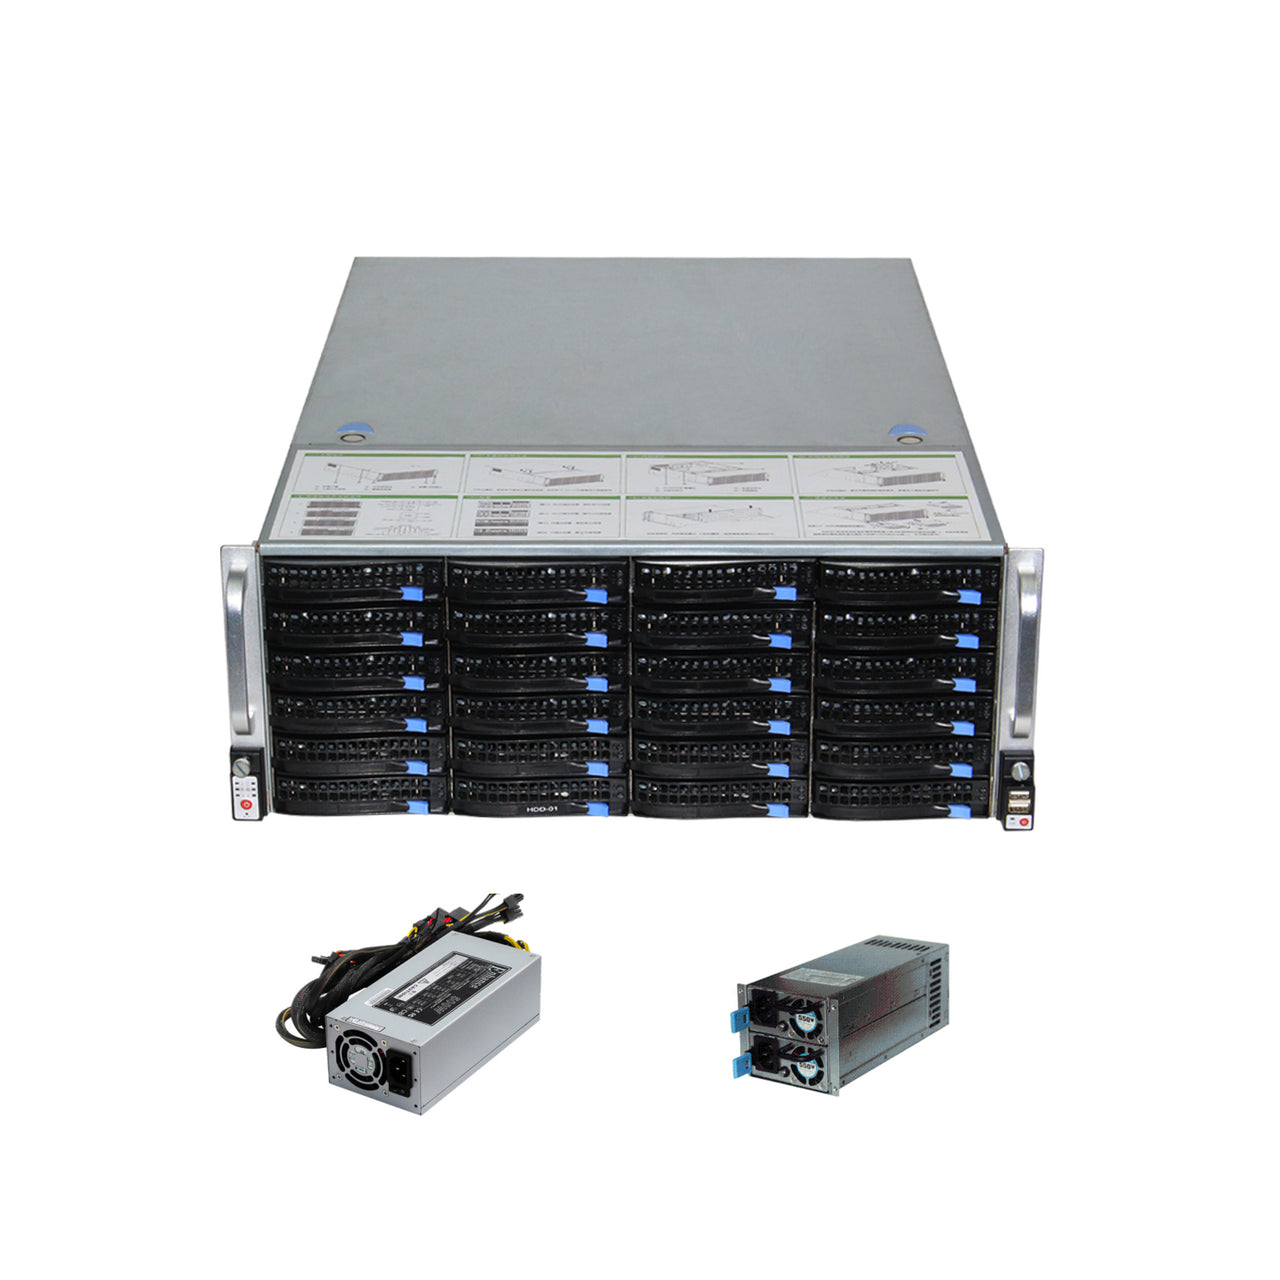 JideTech X86 Super NVR, Centralized Storage Management Device Support 128pcs Cameras Input(NVSS8724-128)